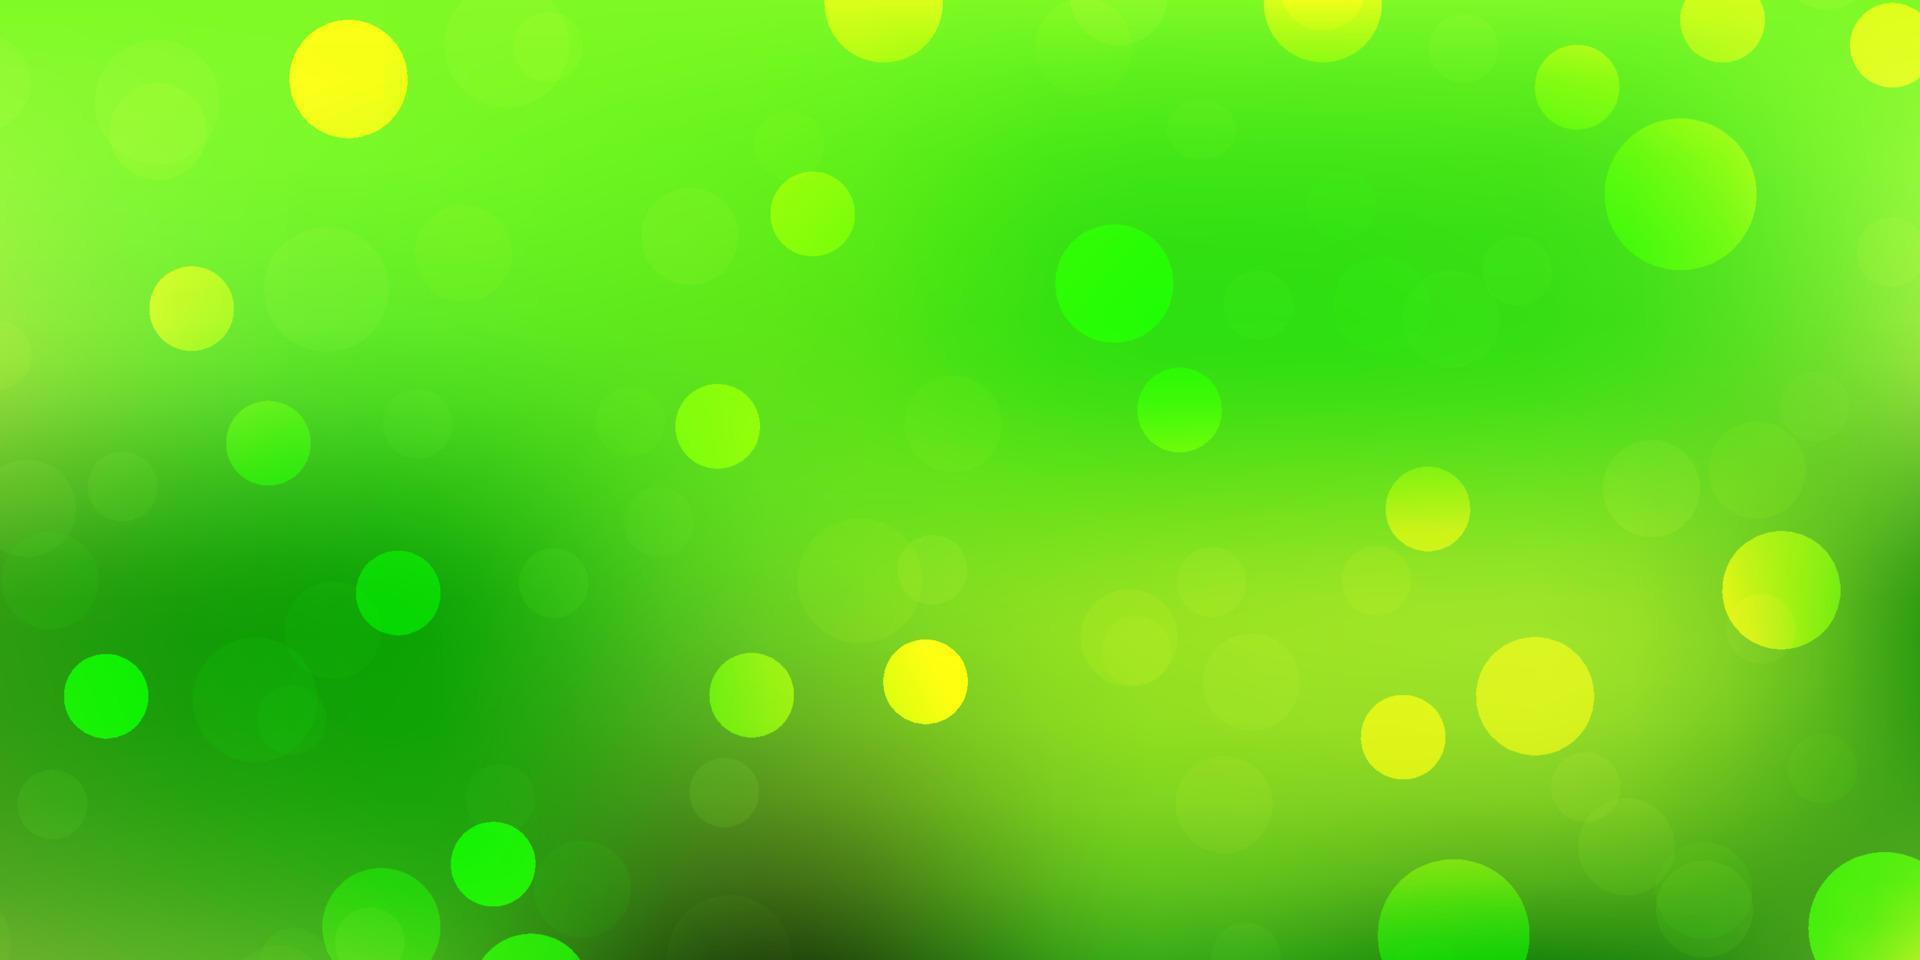 fundo vector verde e amarelo claro com manchas.